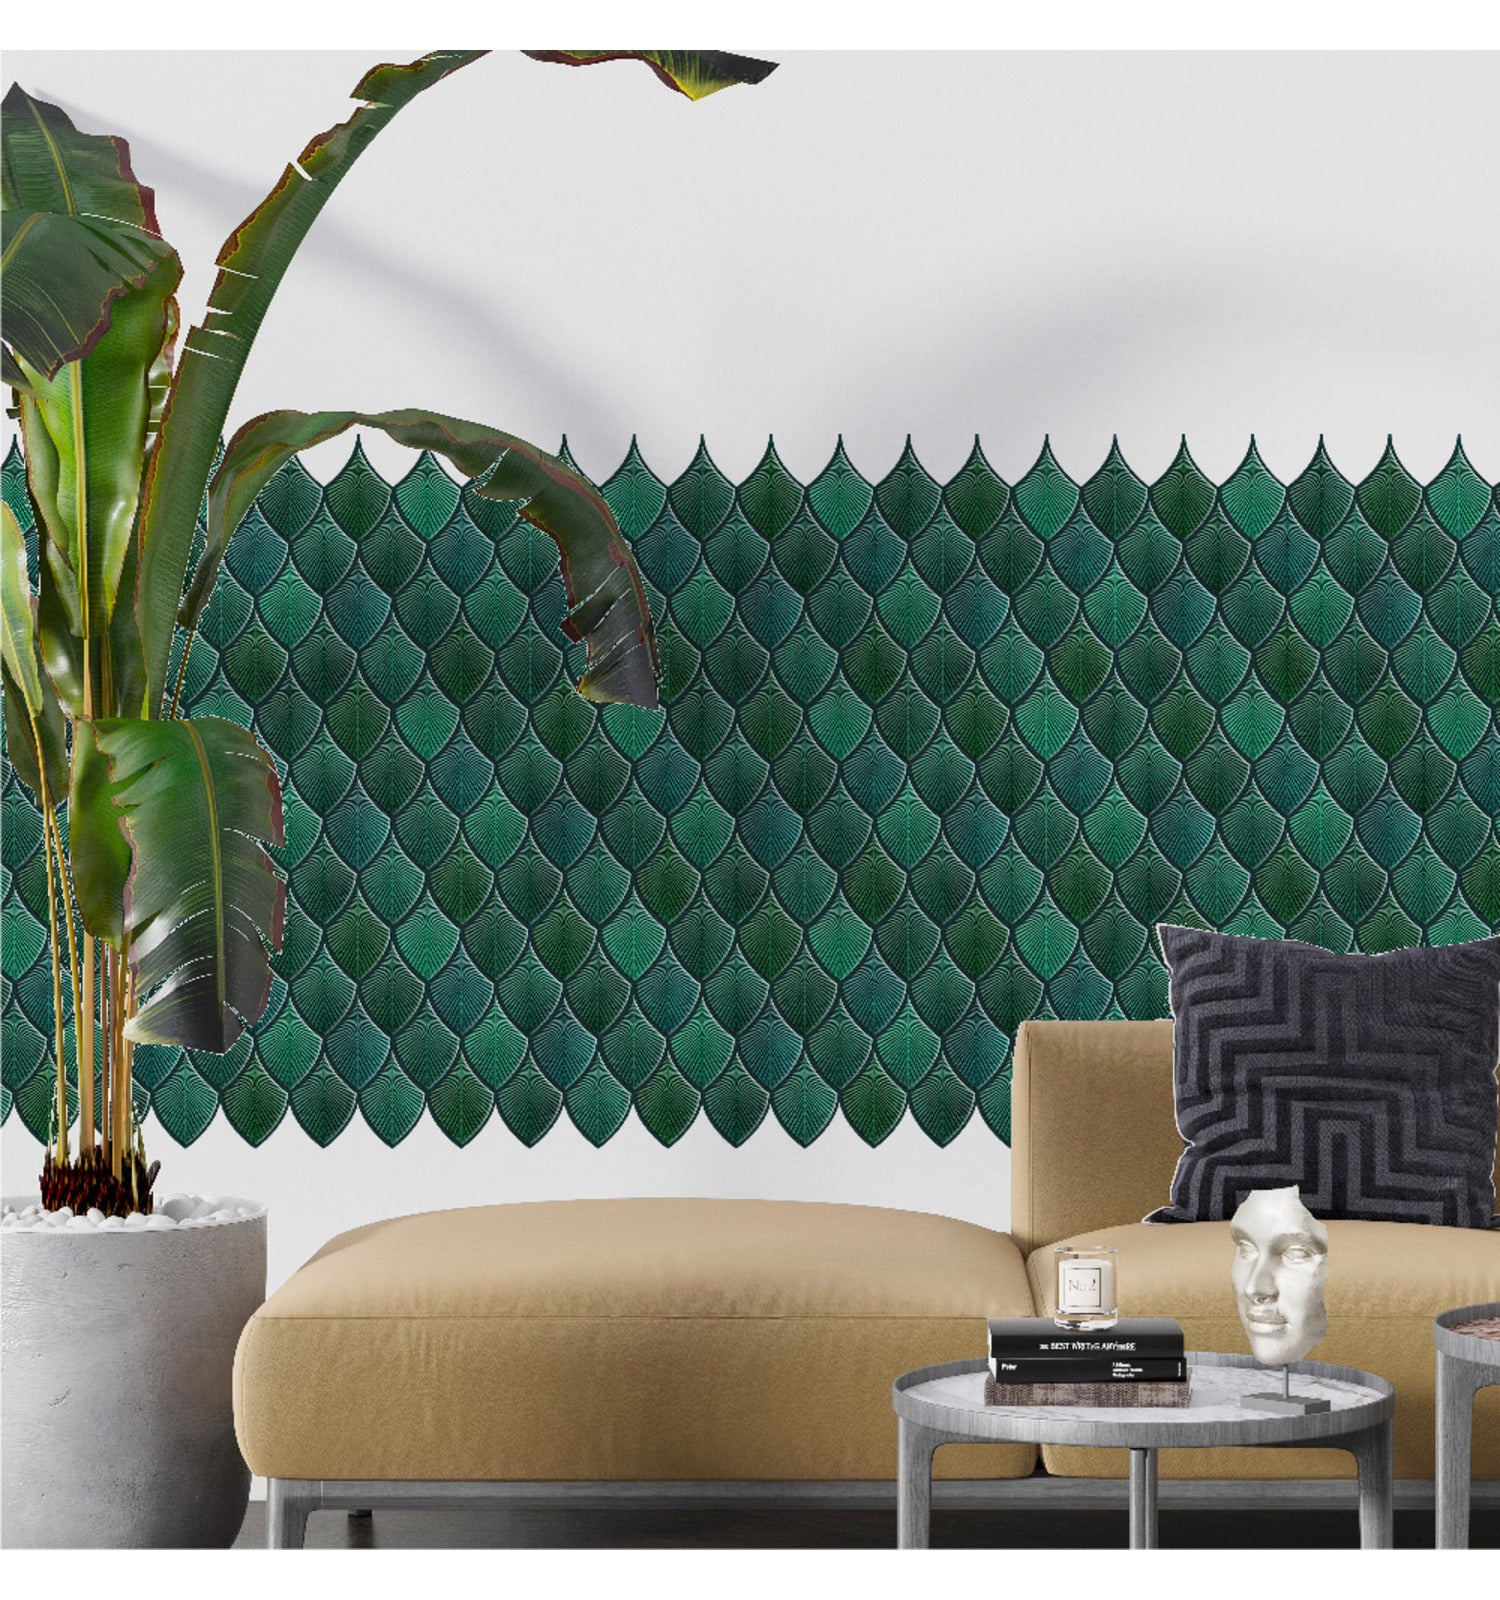 Emerald Green Peel and Stick Teal Wall Tile | Kitchen Backsplash Tiles